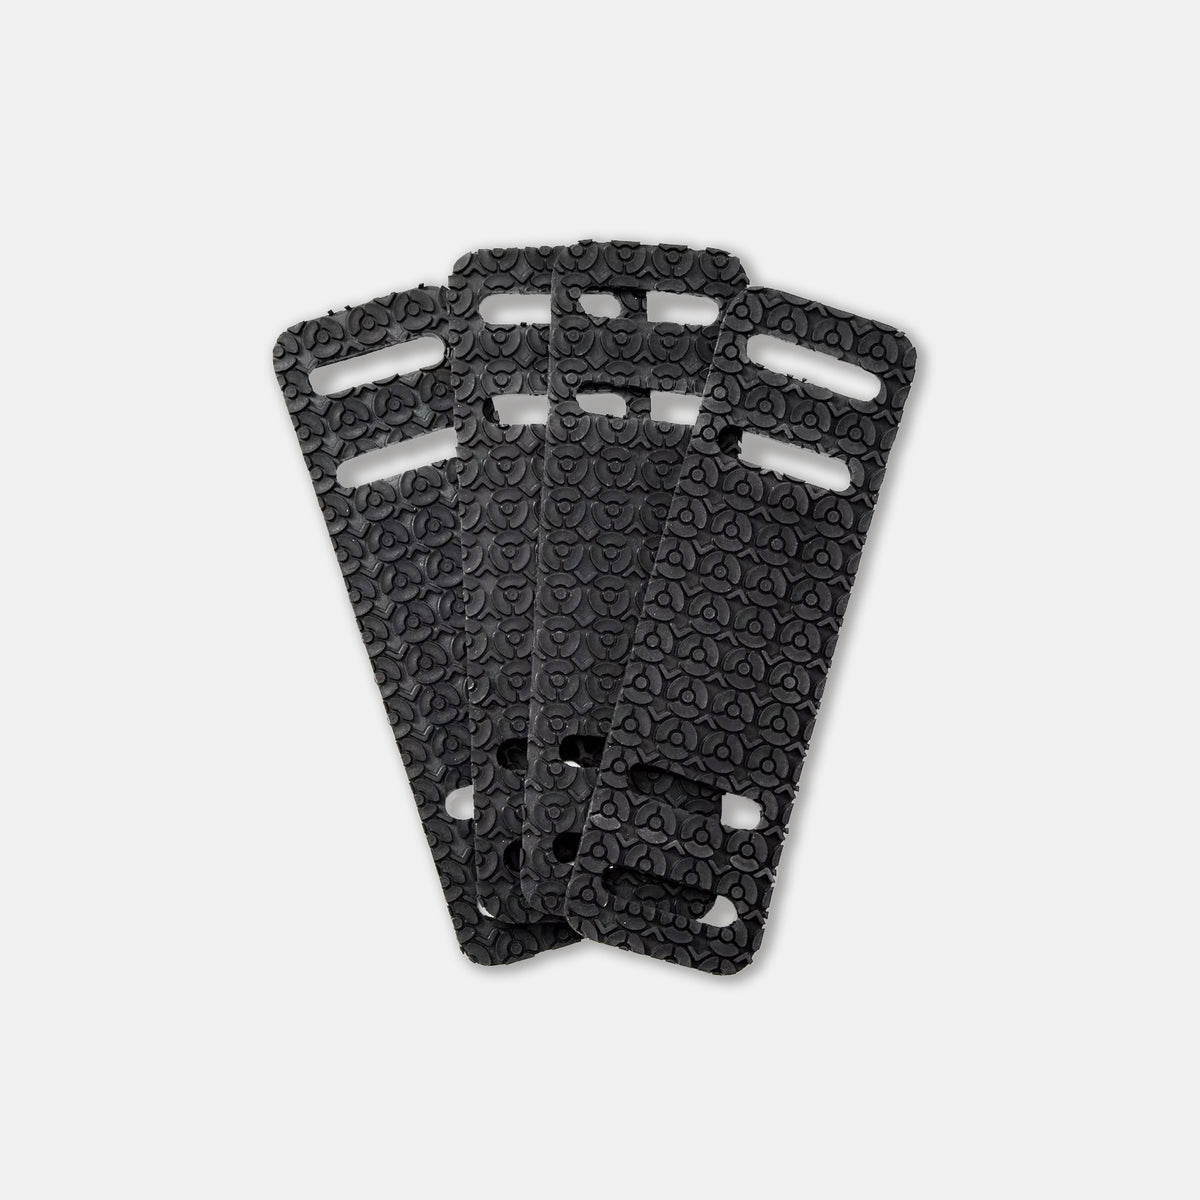 Wraptie - The world's smartest multi-functional strap. - Hexlox